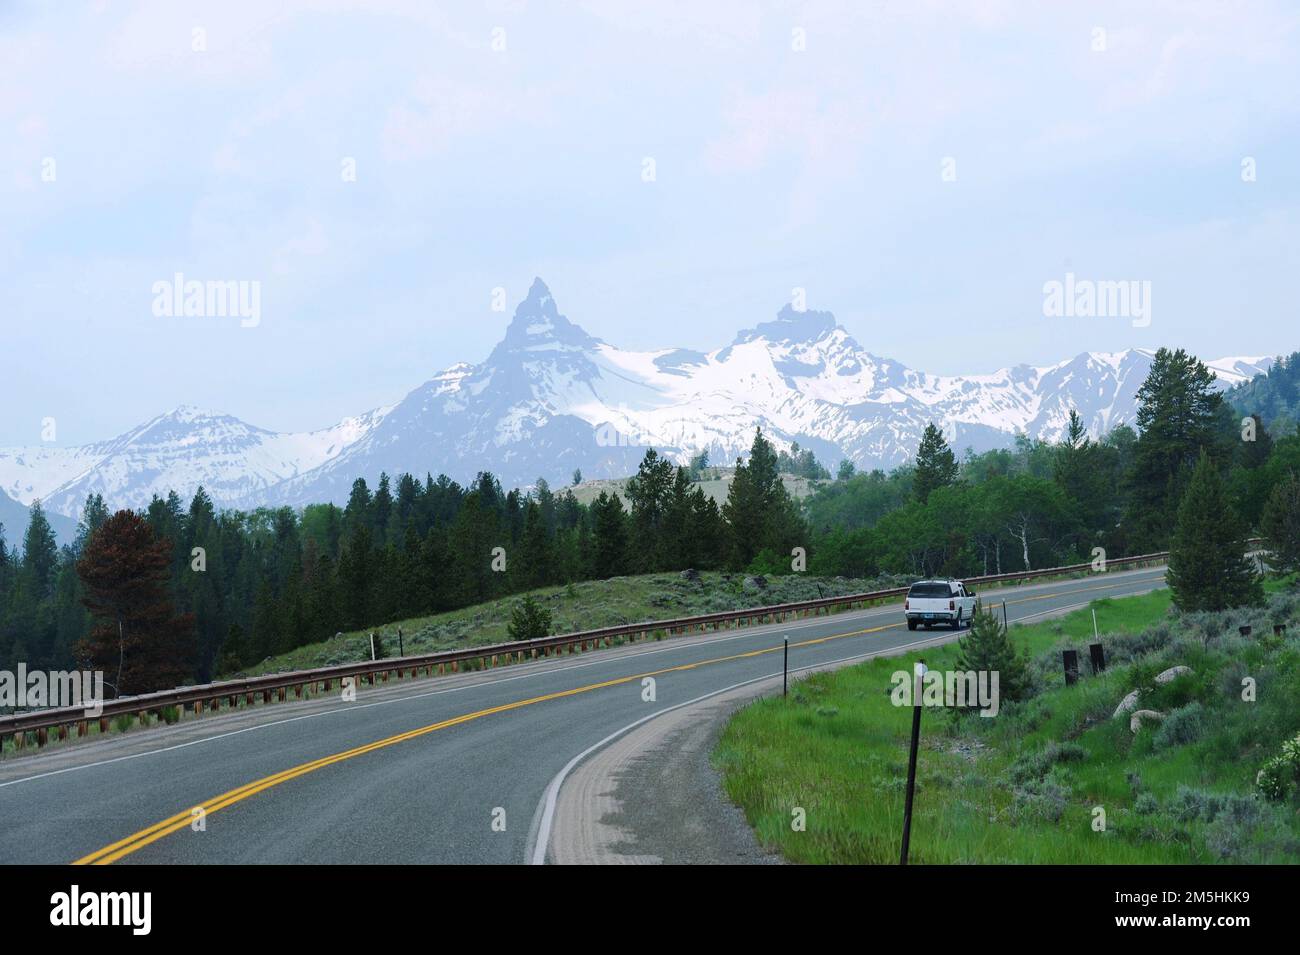 Beartooth Highway - Scenic Pilot e Index Peaks. La lussureggiante erba verde fienga la strada, mentre la neve copre le vette pilota e indice. Posizione: Scenic Pilot and Index Peaks, Wyoming (44,958° N 109,813° W) Foto Stock